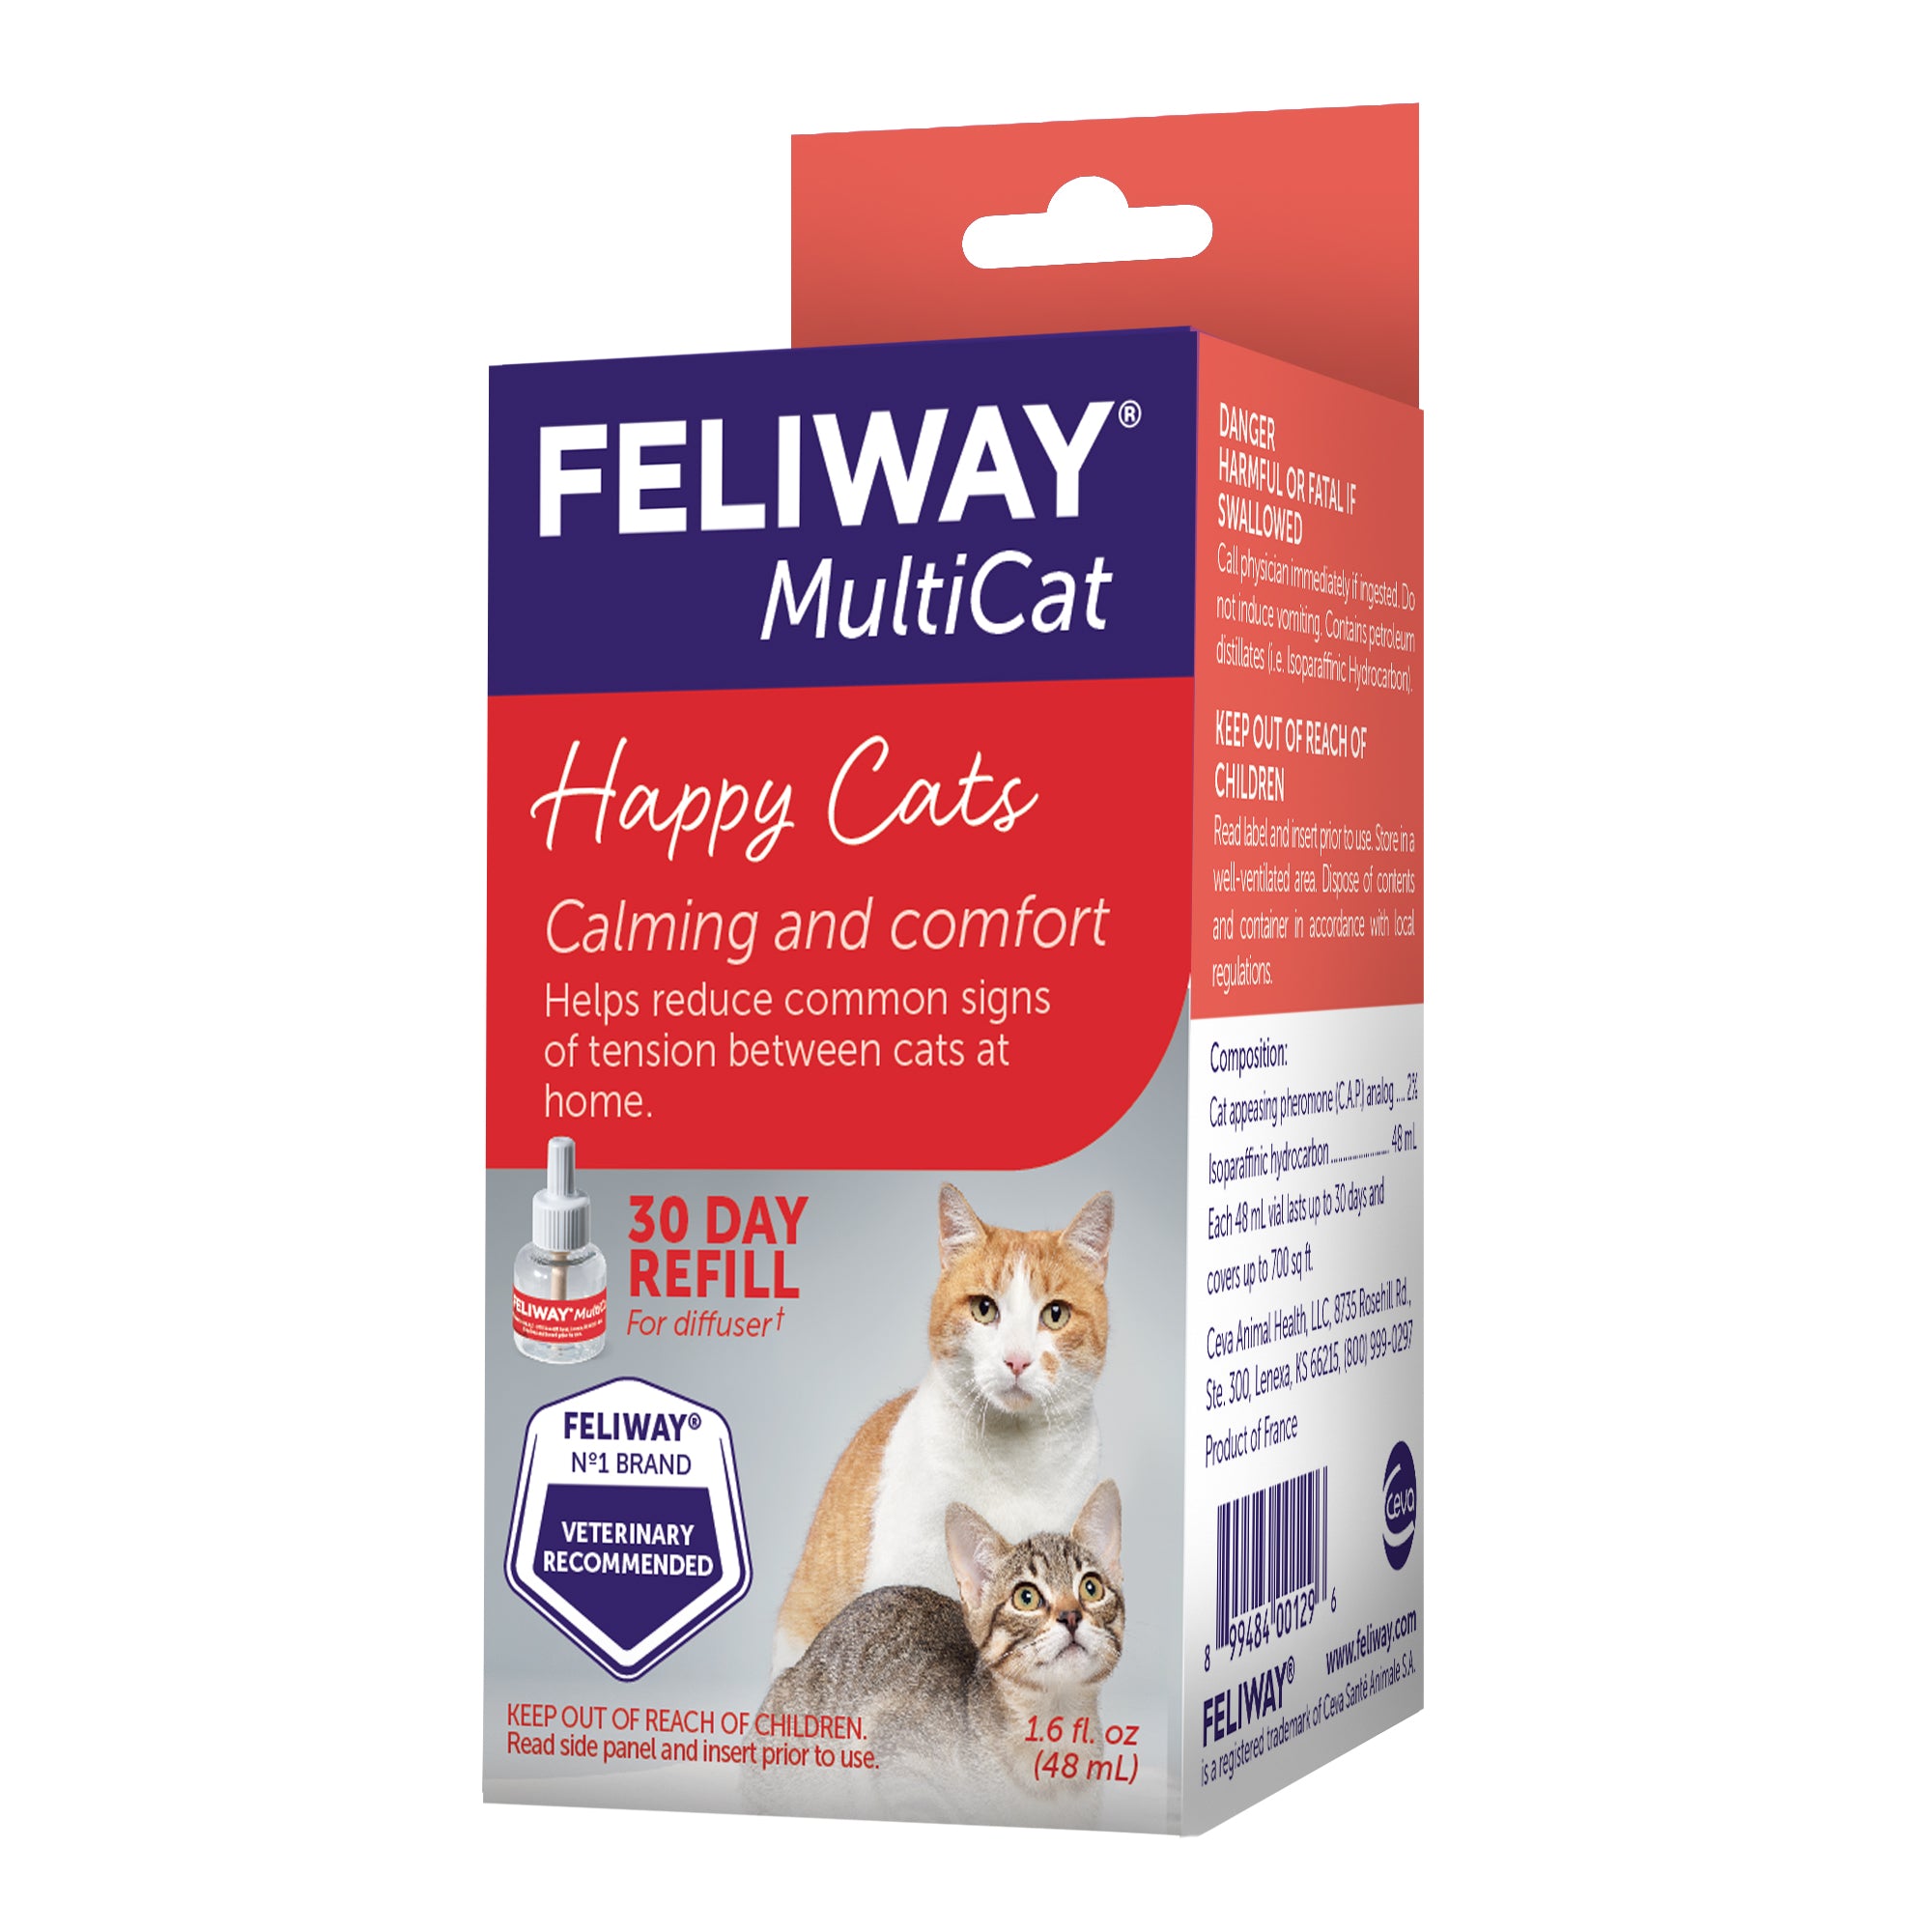 Buy Feliway MultiCat 30 Day Diffuser Refill Online